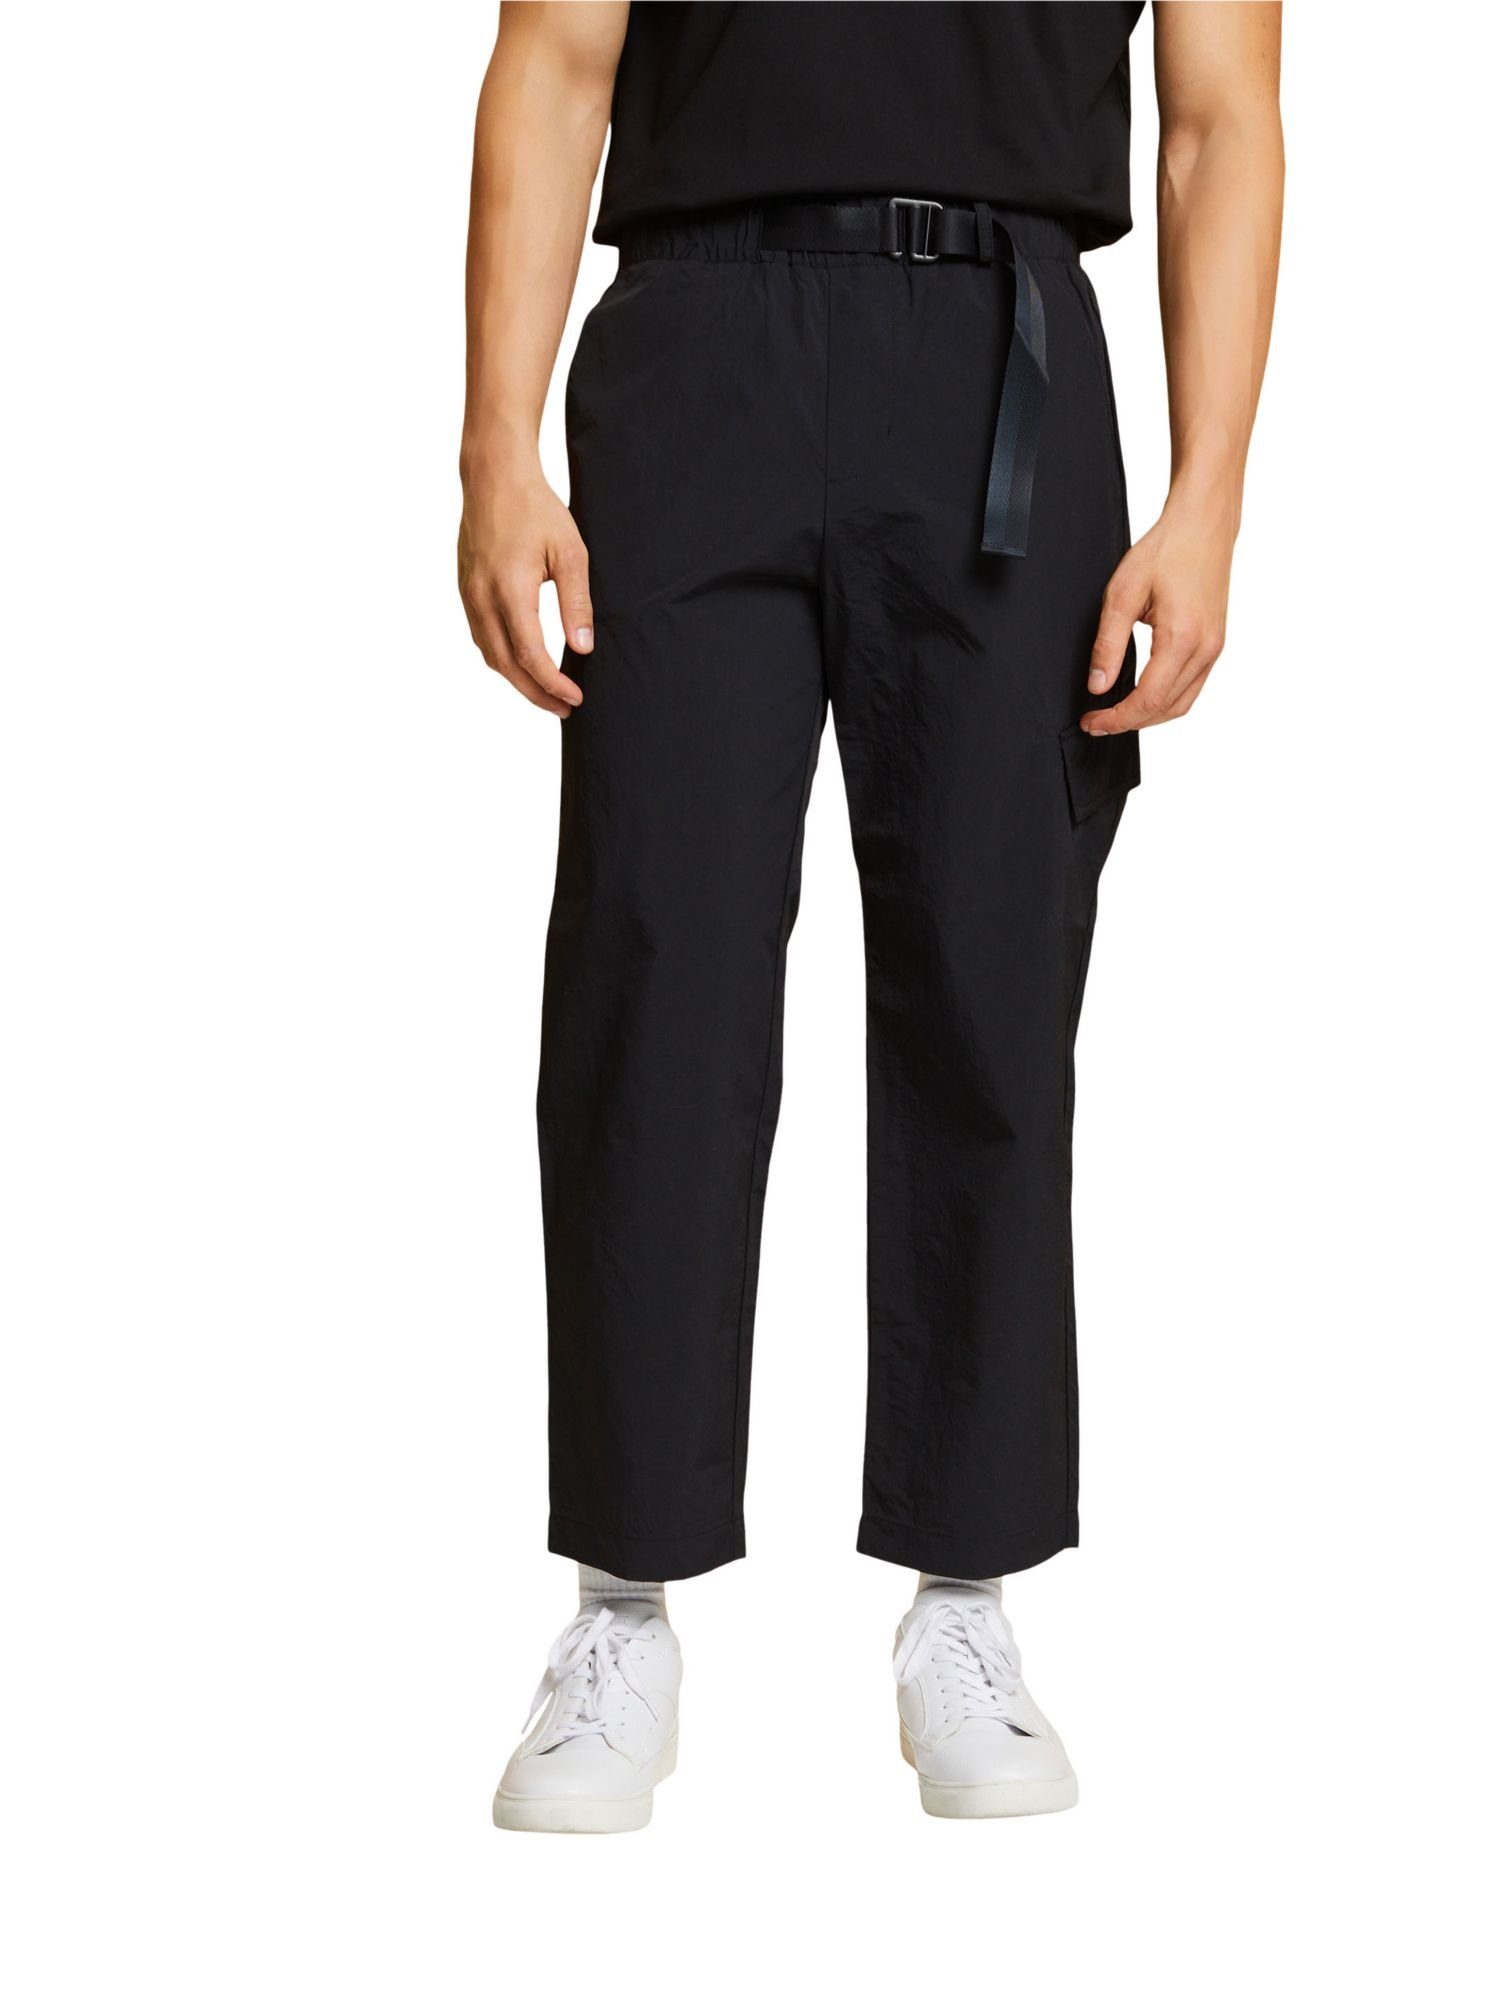 Bein BLACK Collection Esprit Cargohose Pants mit geradem Jogger